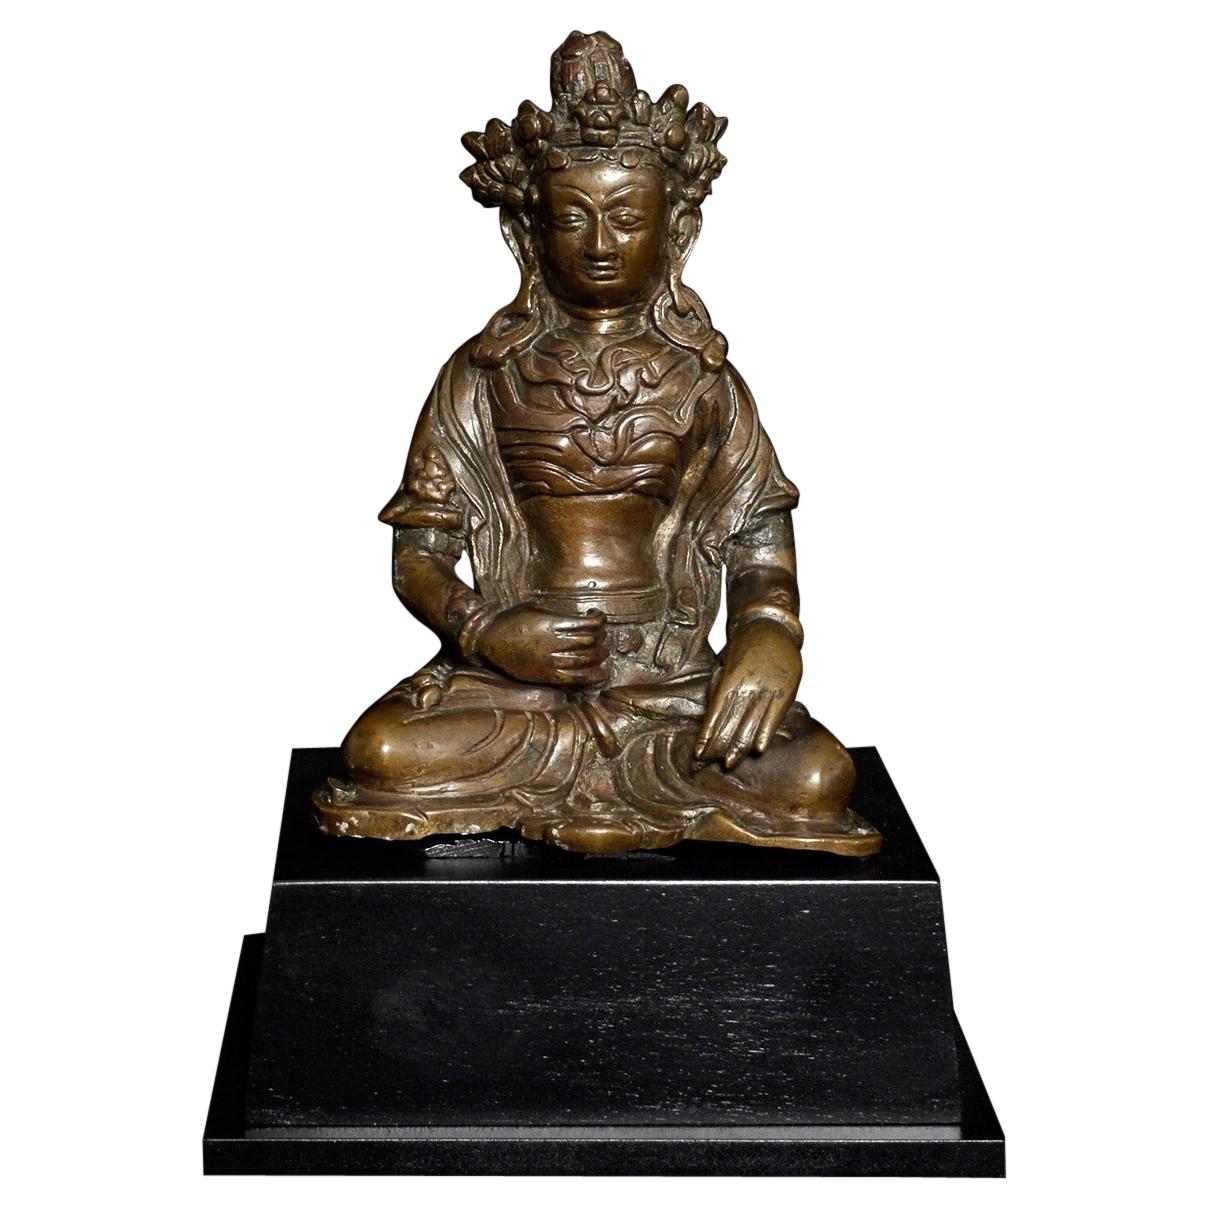 18thC Tibetan Buddha or Bodhisattva. Rare and Fine - 9460 For Sale